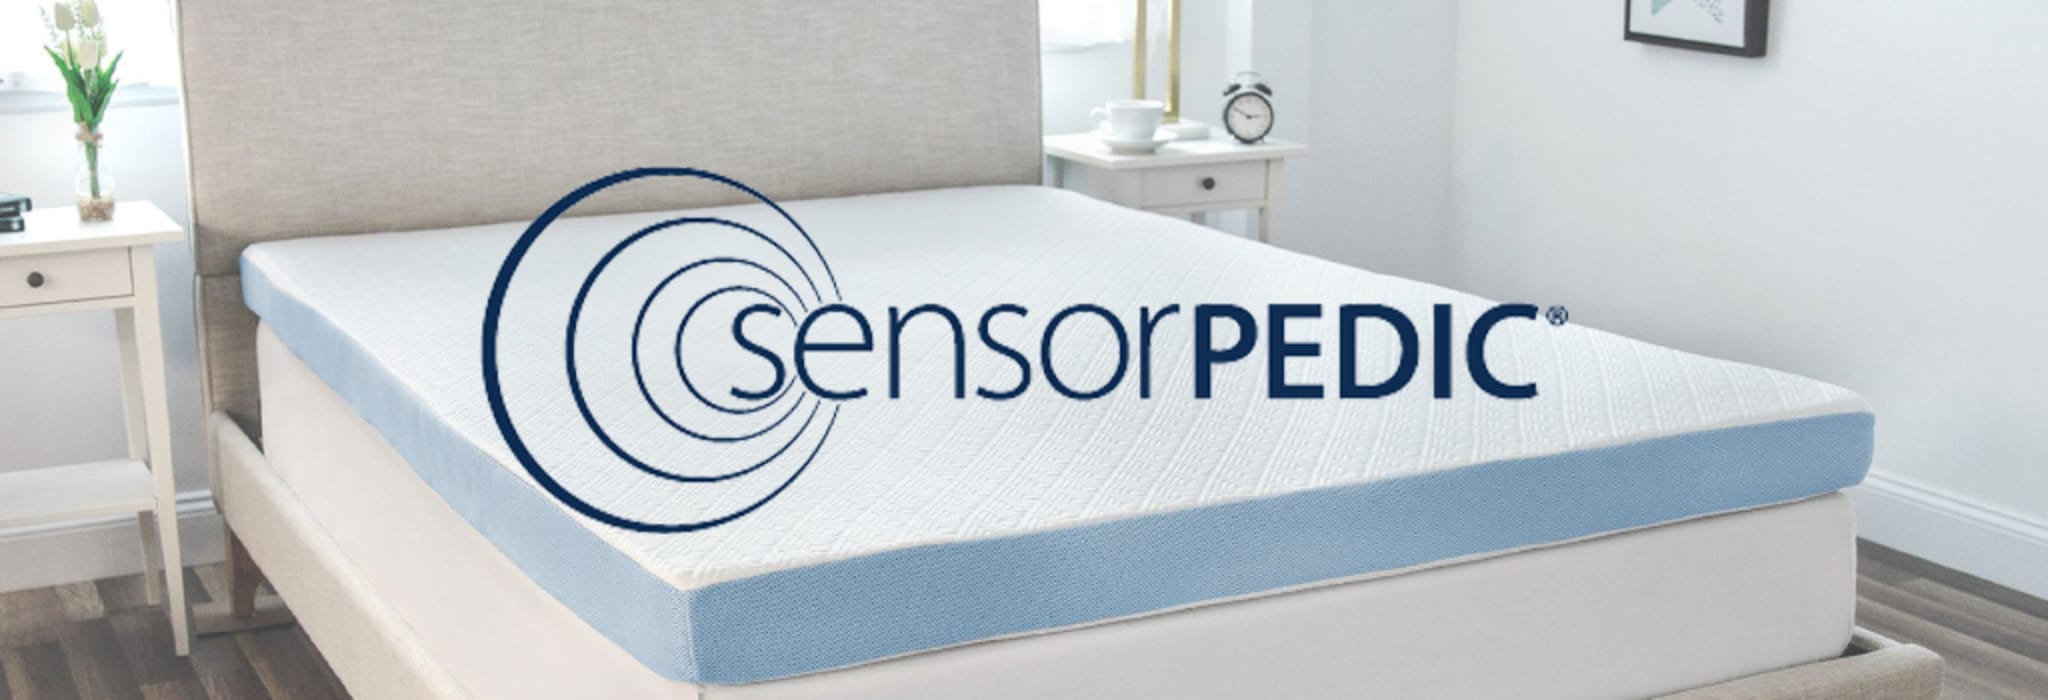 sensorpedic mattress topper 2-inch